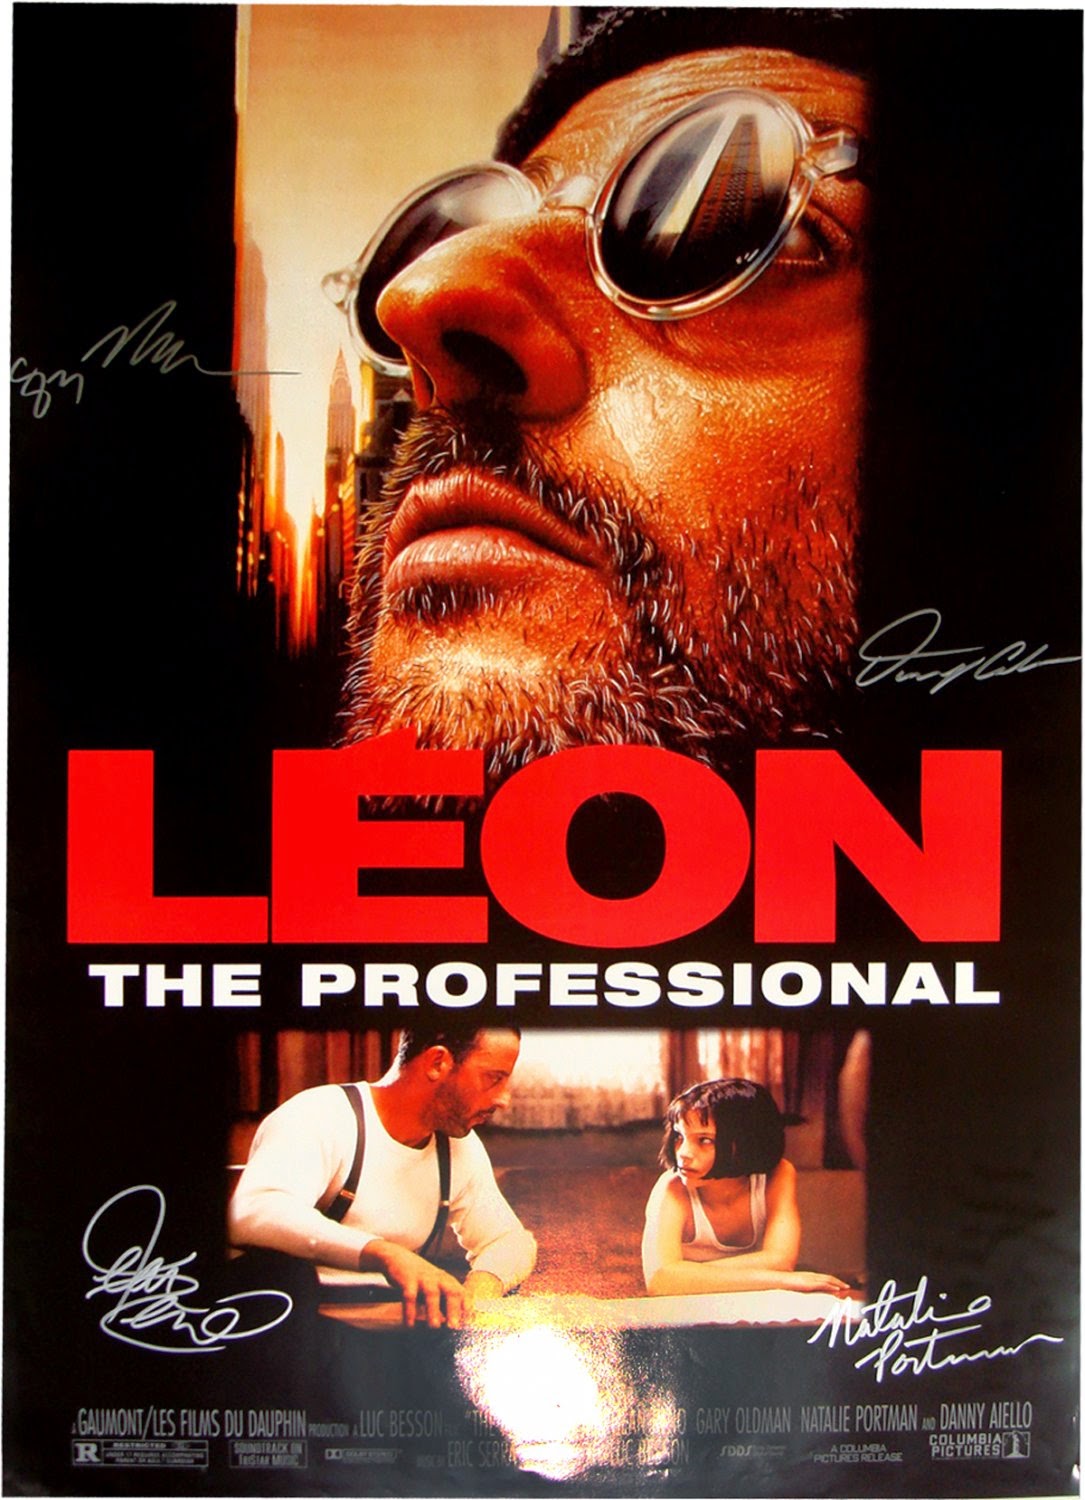 leon the professional 1080p download movie